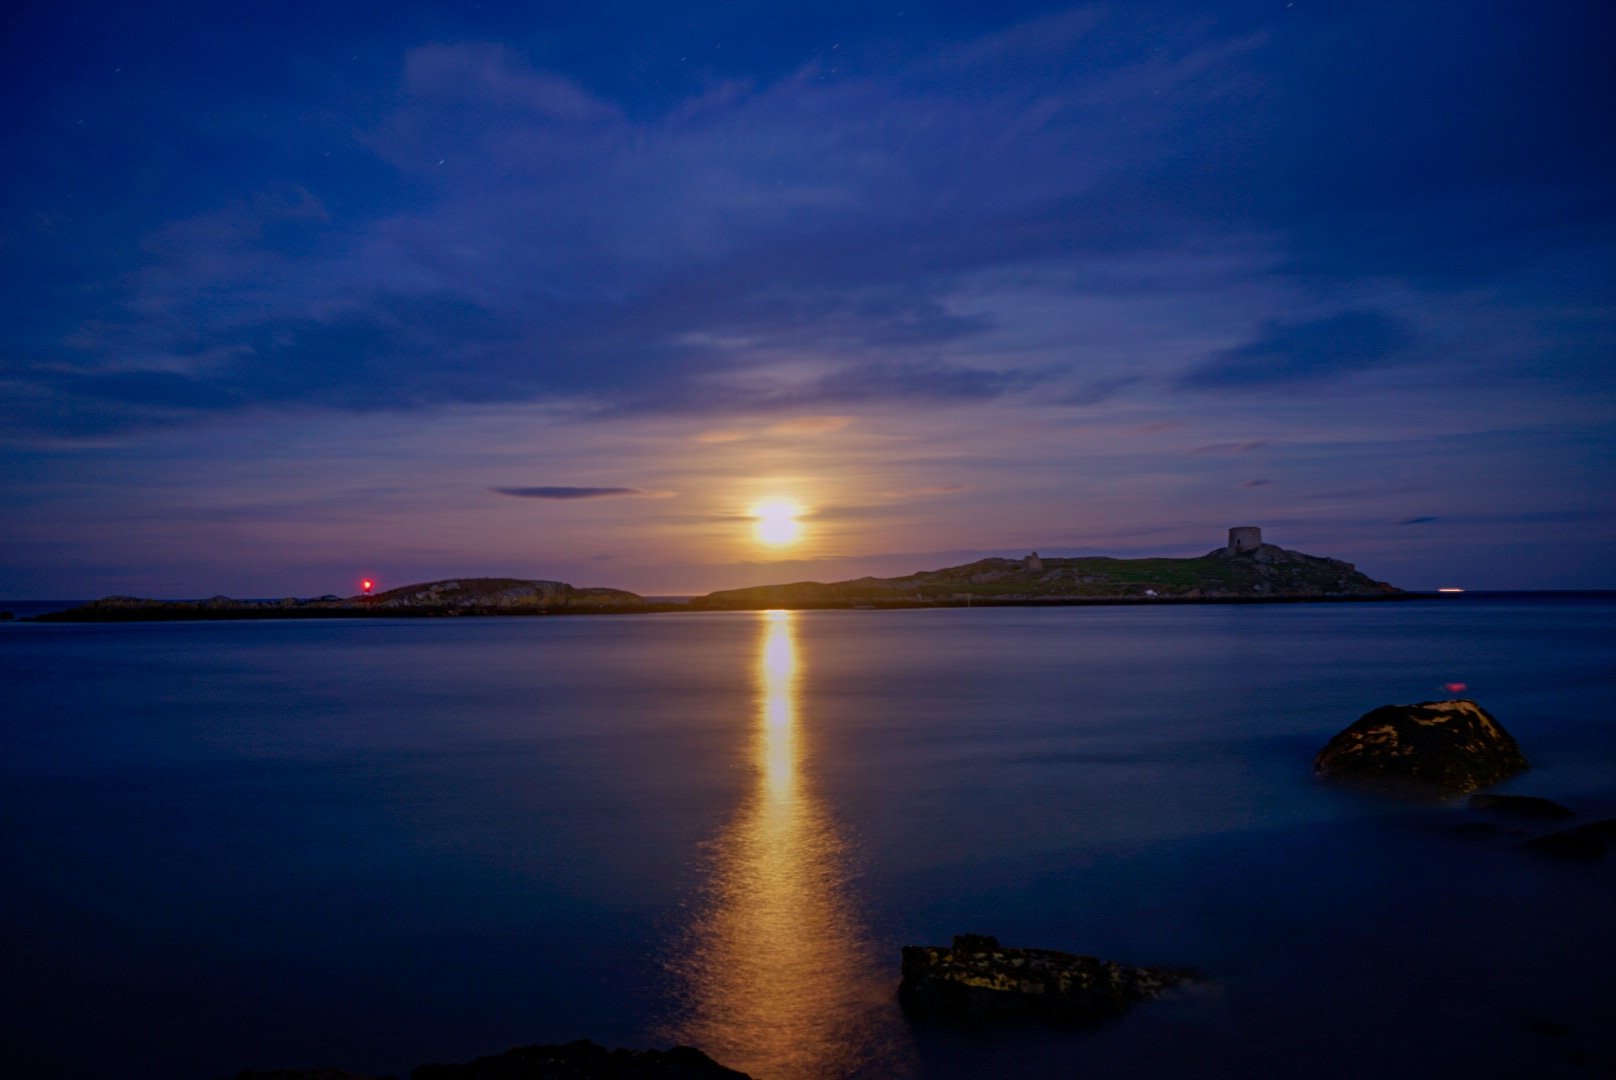 Moon rising over Dalkey Island by thomas mason @nuclearmaso